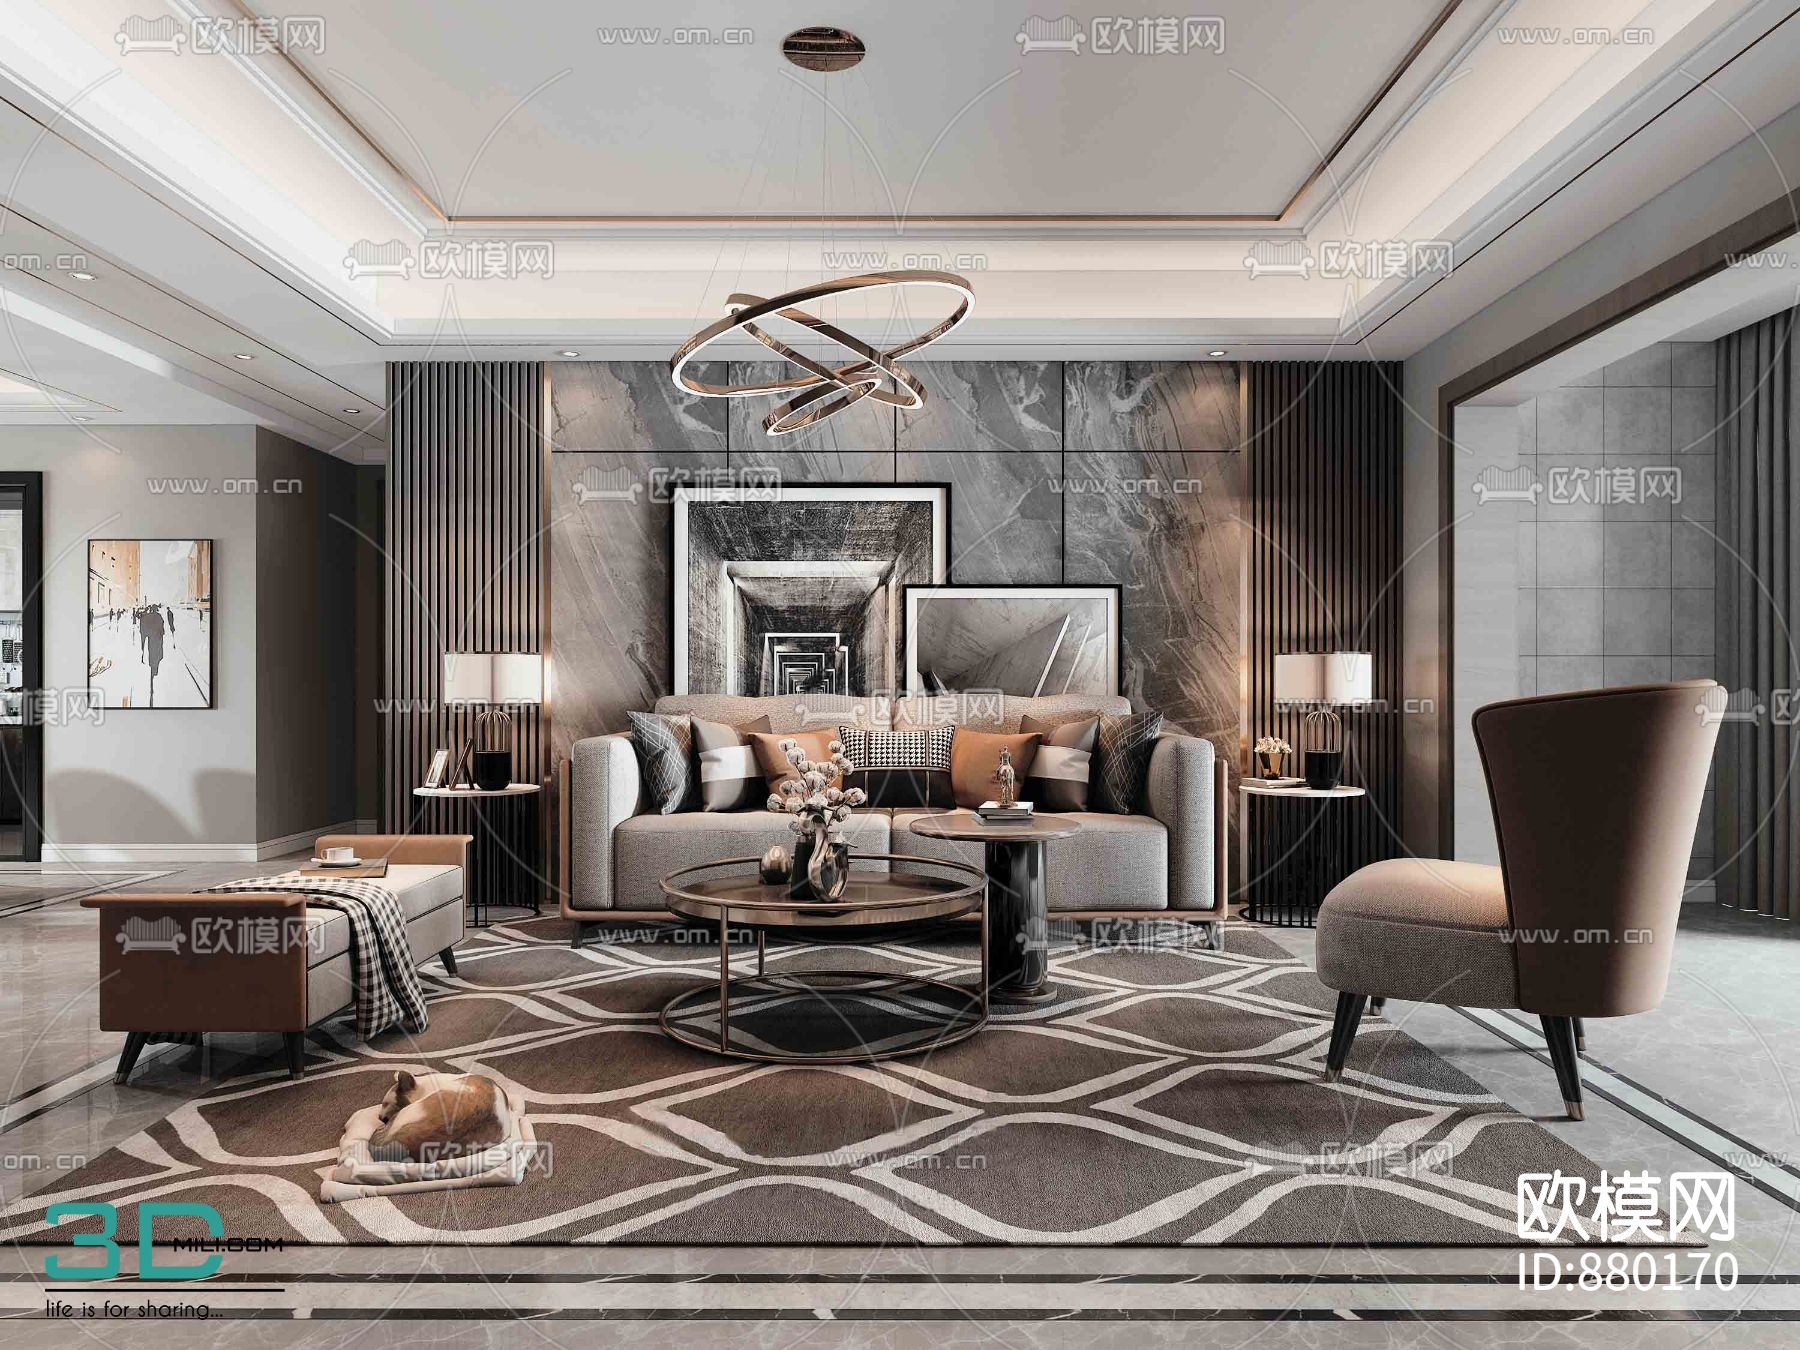 Living Room Decor 3d Model Free Download